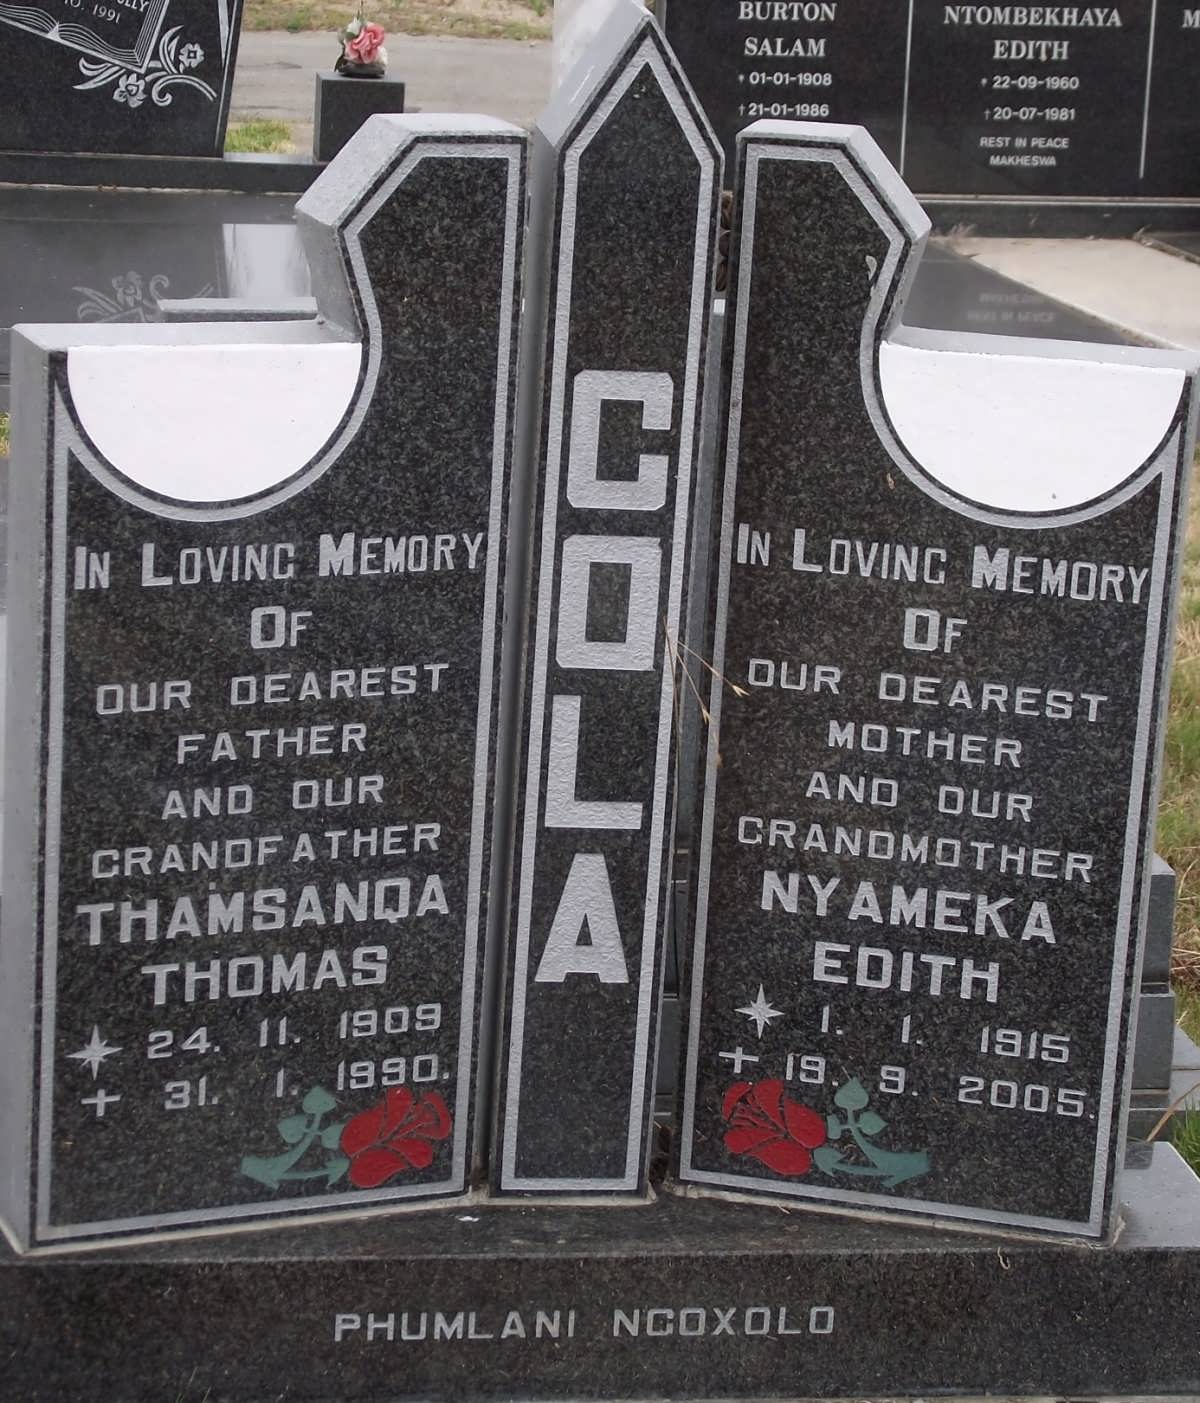 COLA Thamsanqa Thomas 1909-1990 & Nyameka Edith 1915-2005